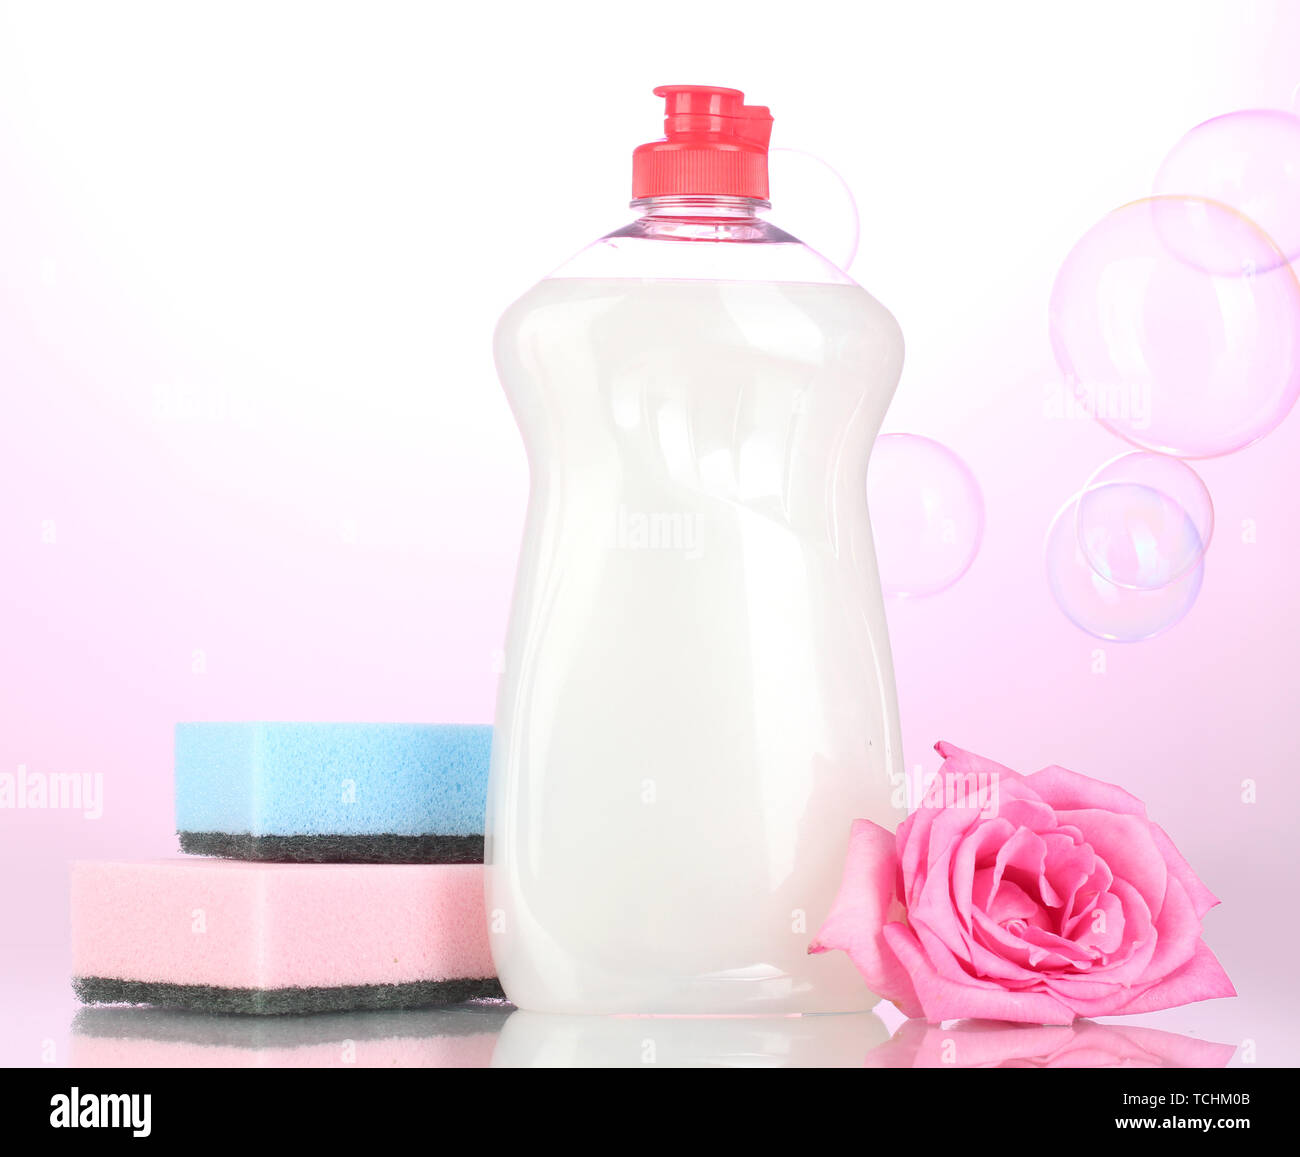 https://c8.alamy.com/comp/TCHM0B/dishwashing-liquid-with-sponges-and-flower-on-pink-background-TCHM0B.jpg